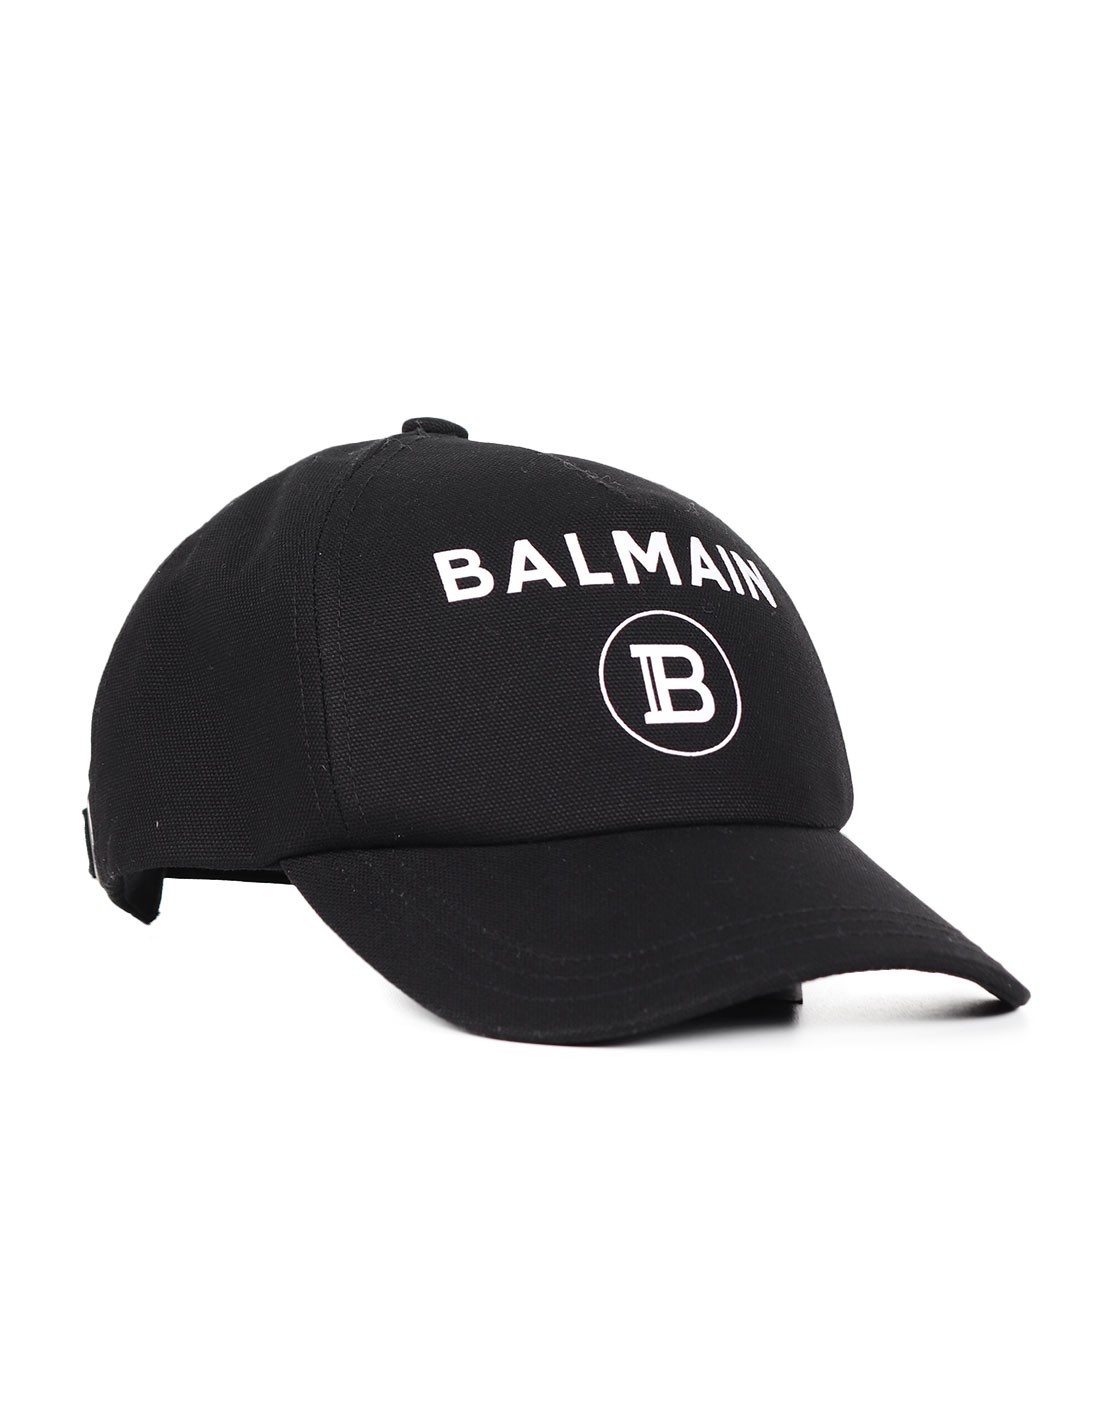 BALMAIN black cap with logo